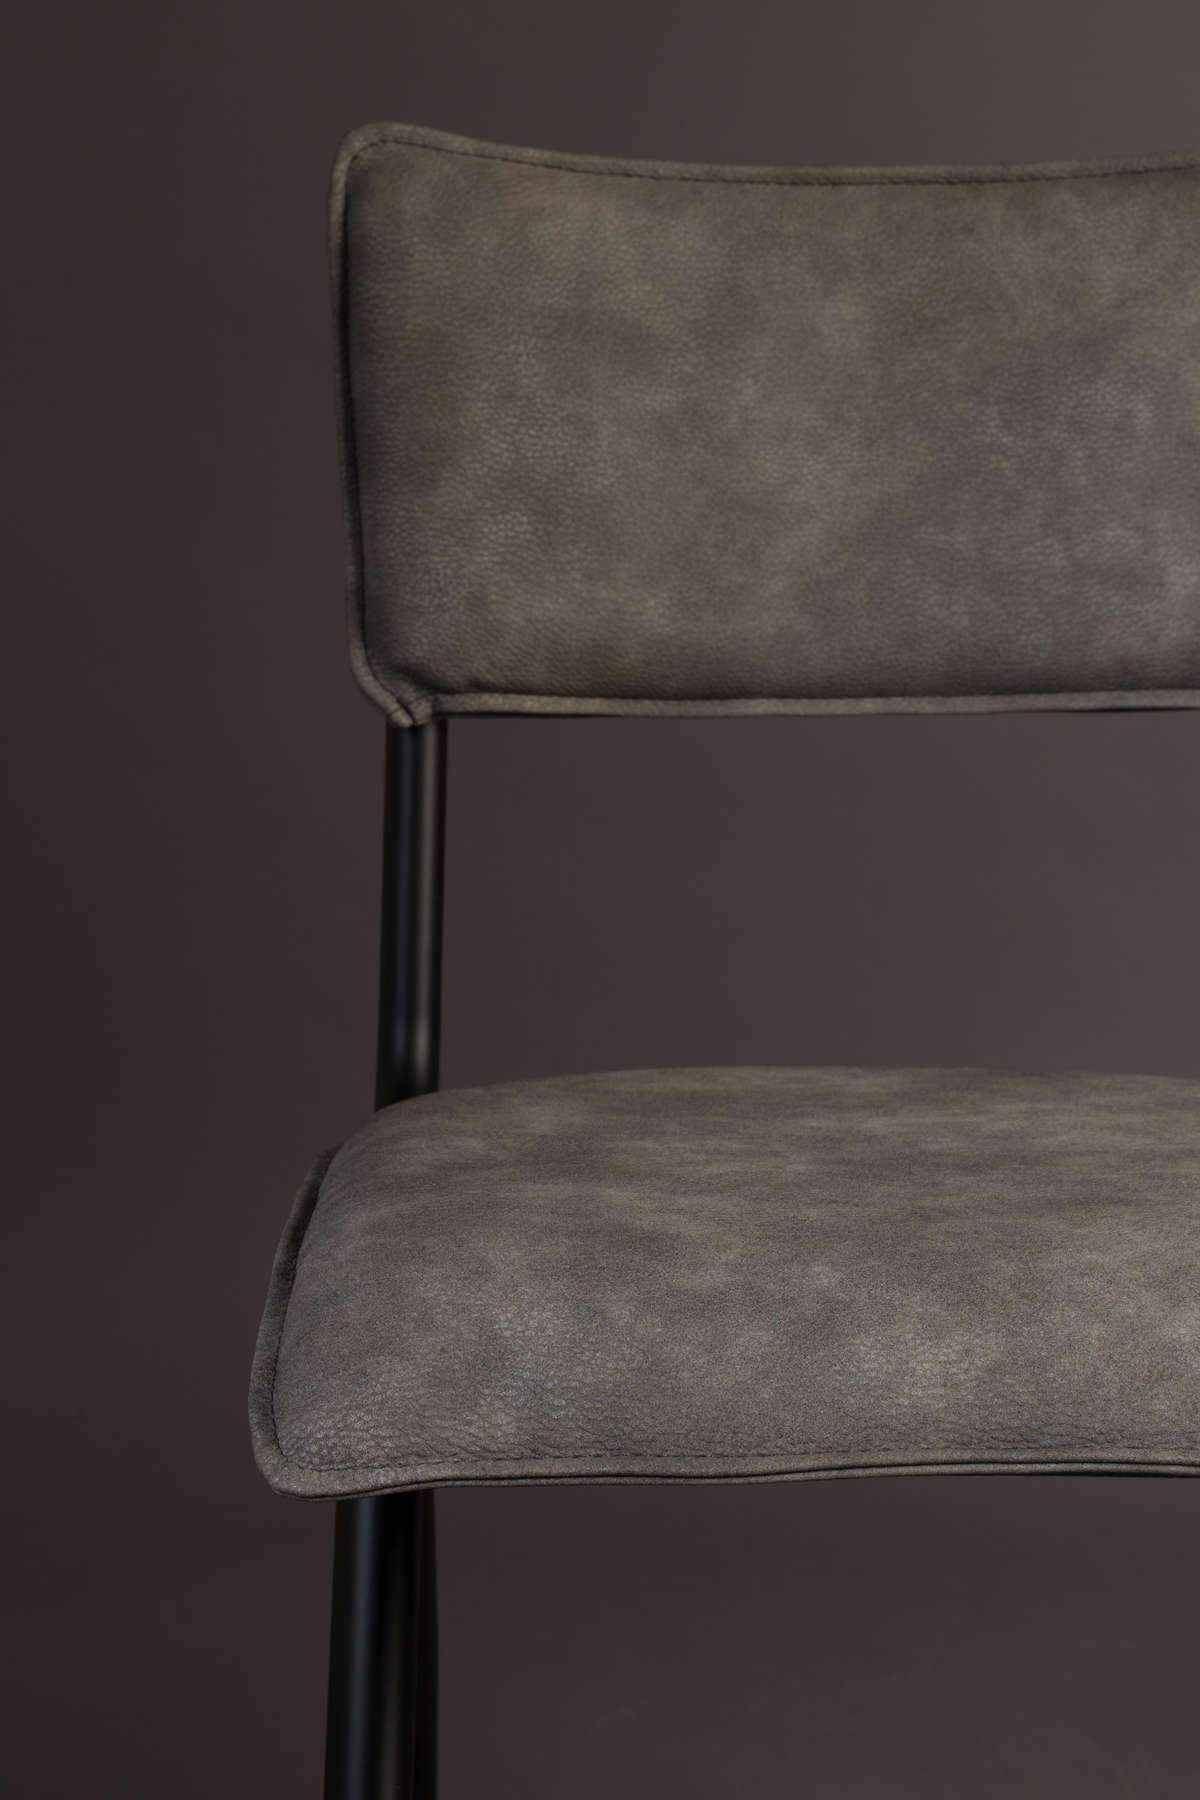 WILLOW chair eco leather grey, Dutchbone, Eye on Design